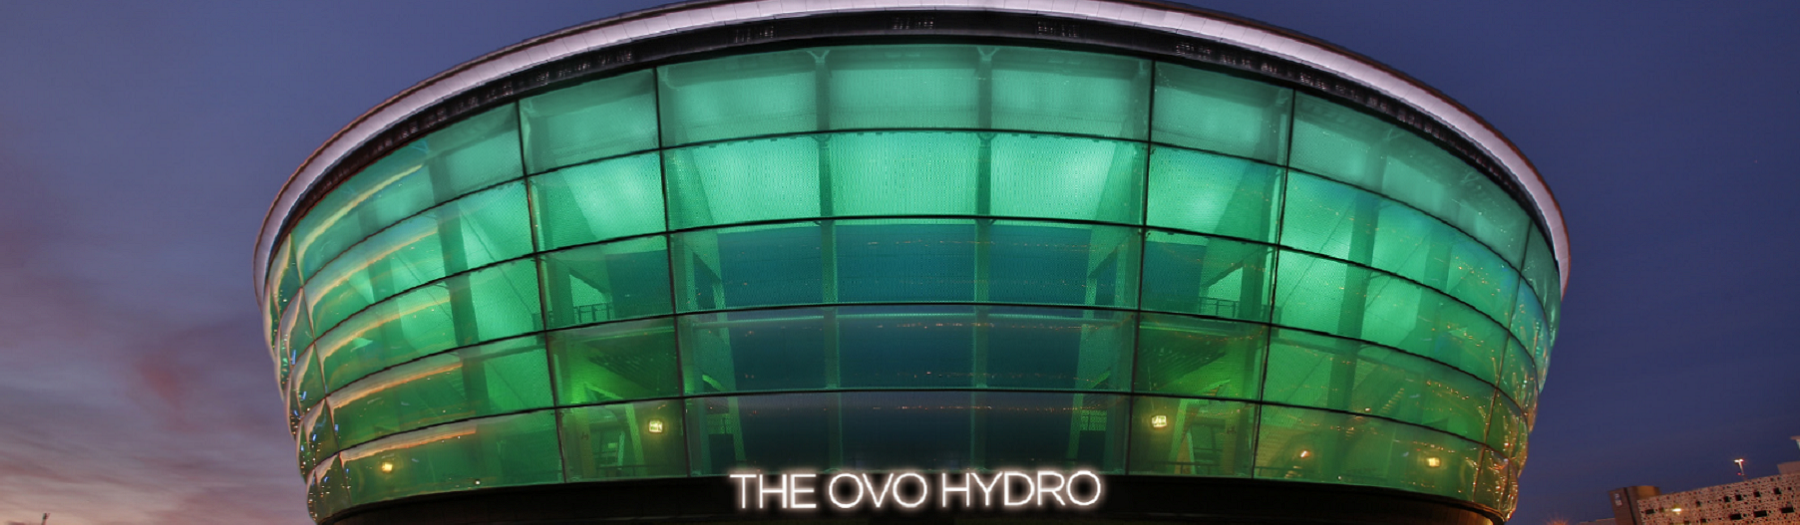 OVO Hydro exterior